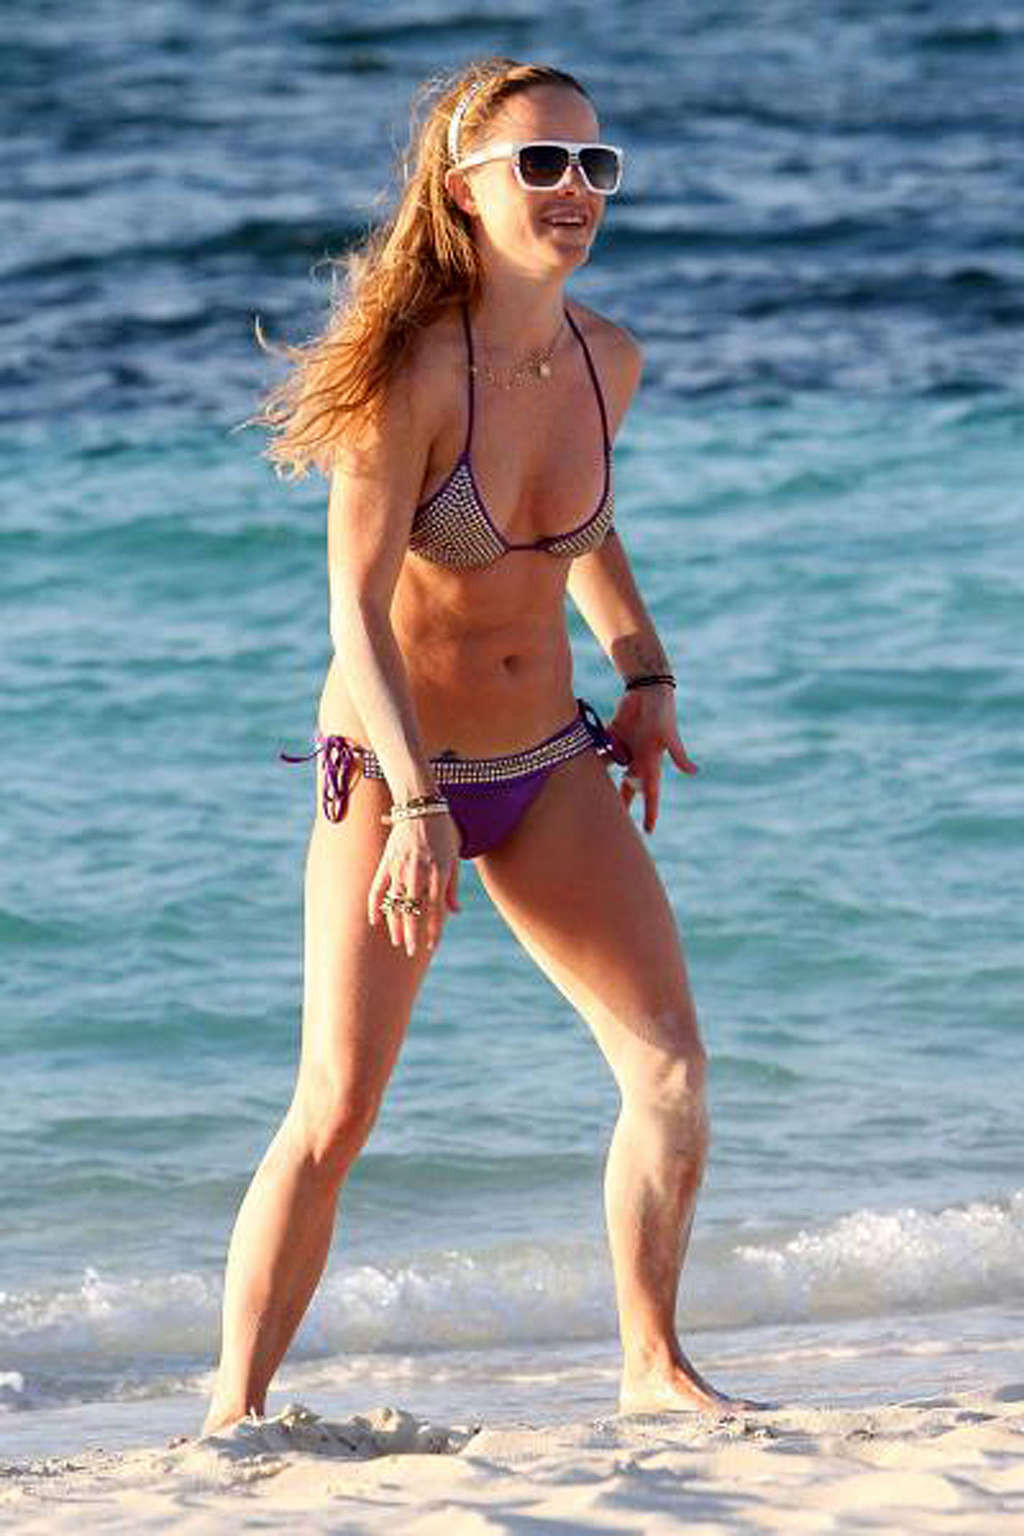 Taryn manning exposant son corps sexy et son cul chaud en bikini sur la plage
 #75349178